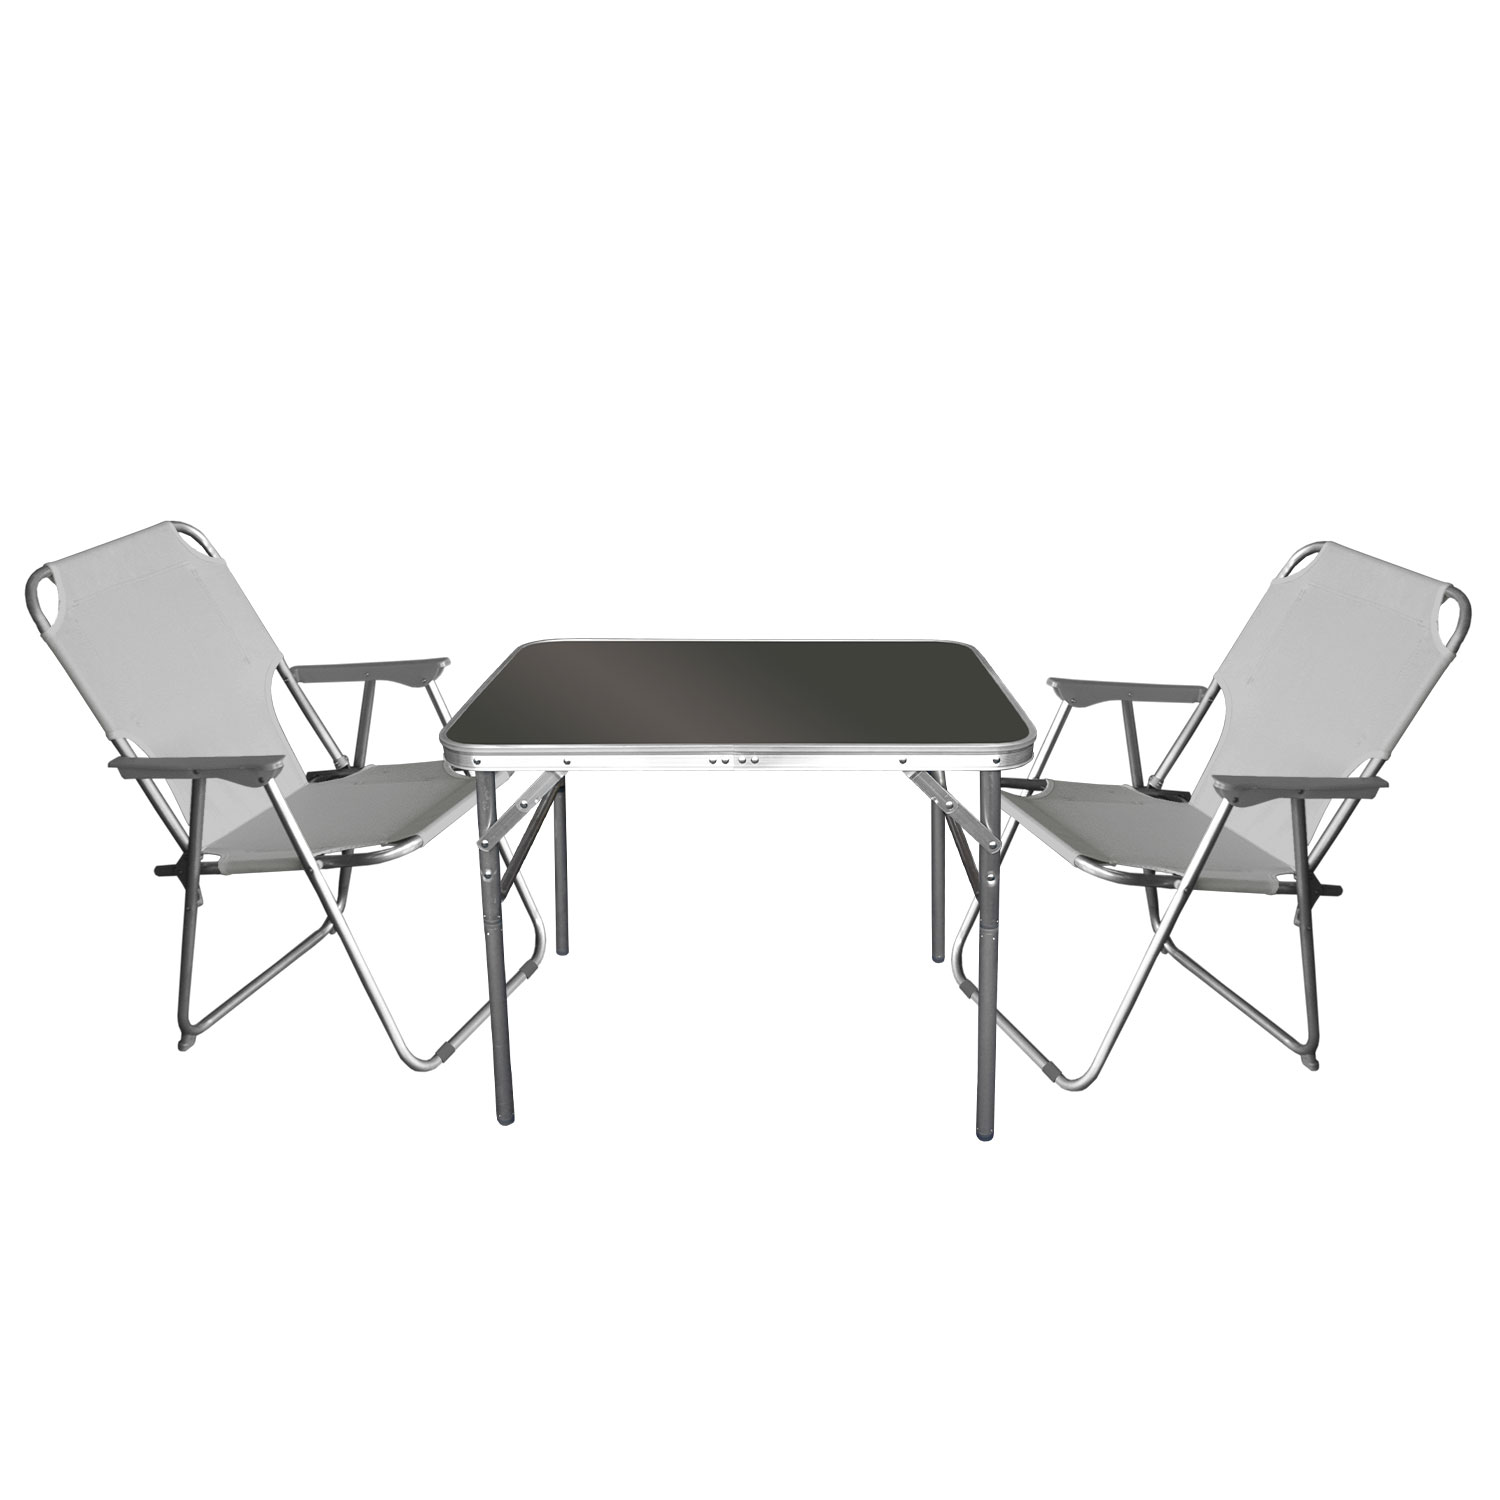 2x Klappstuhl Tampa 3tlg Gartenmöbel Campingmöbel Set Kunststoff Tisch 78x78cm 